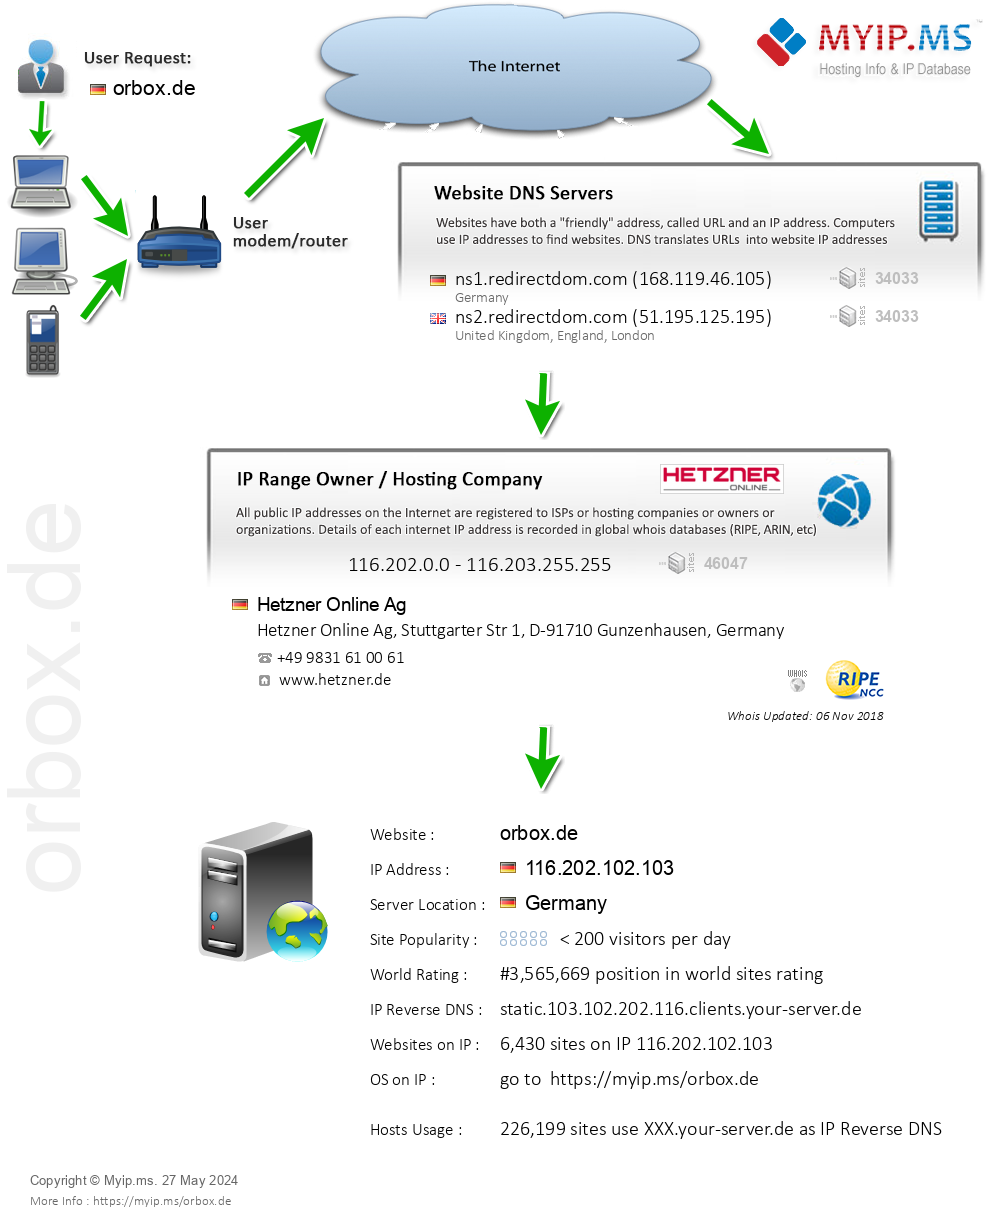 Orbox.de - Website Hosting Visual IP Diagram